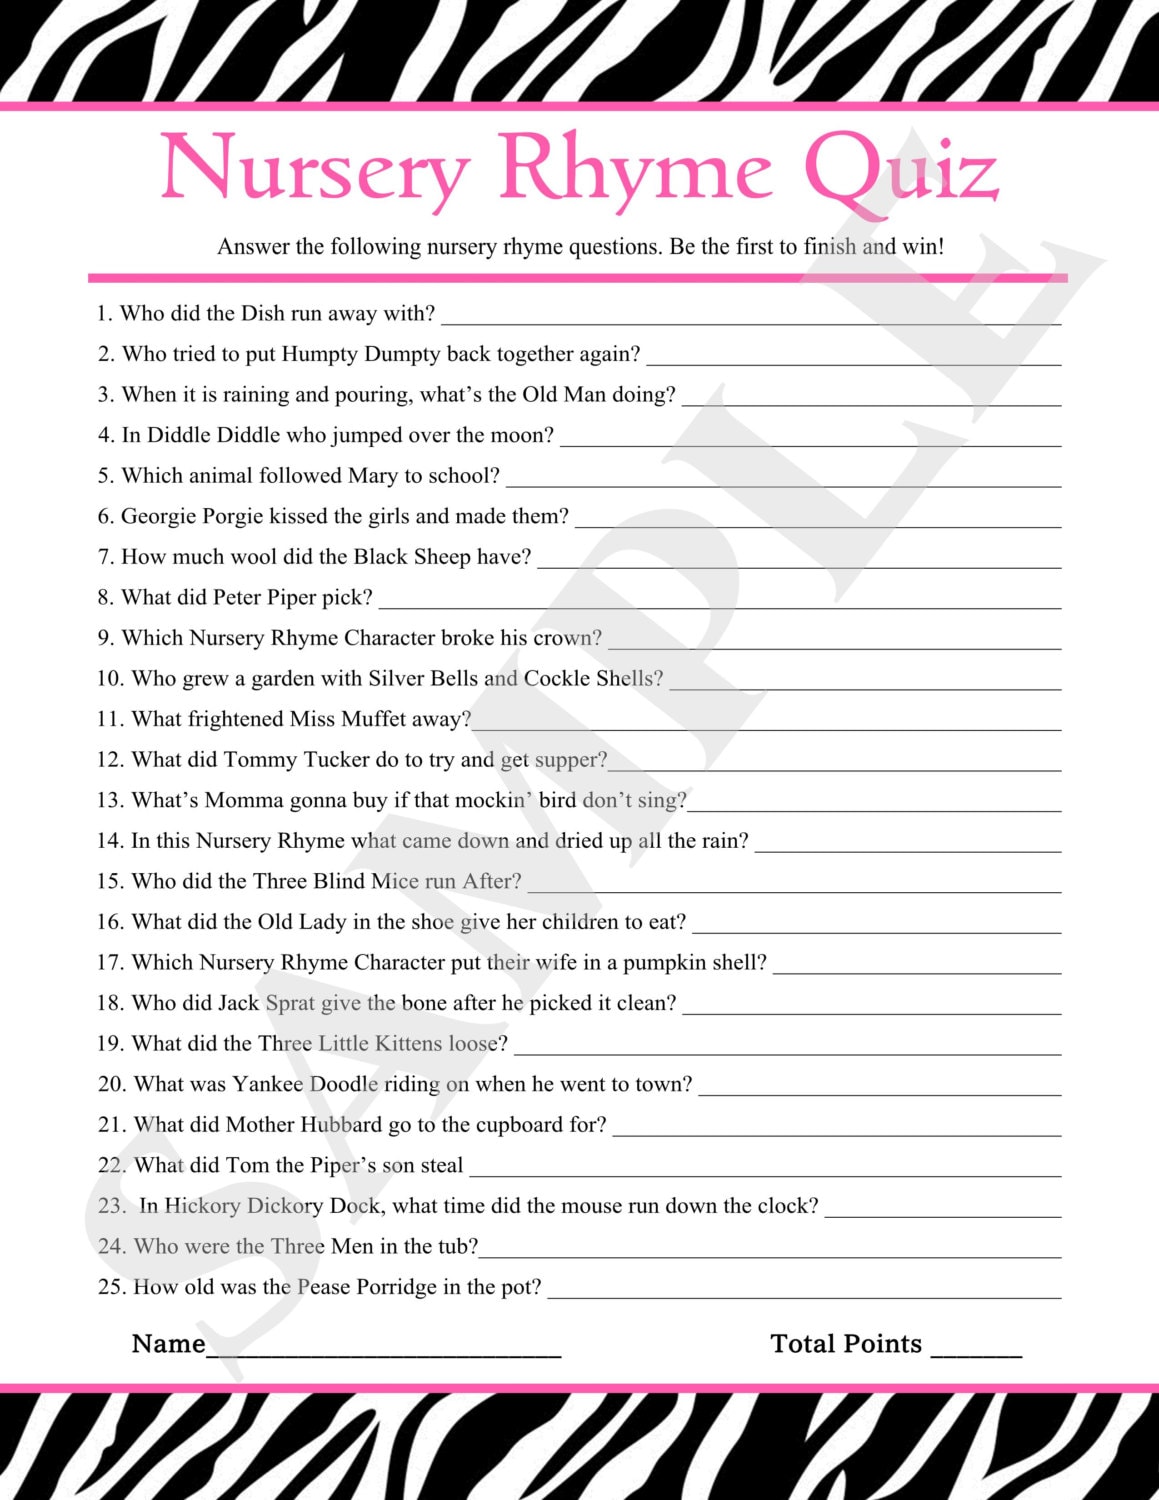 Instant Download Printable Nursery Rhyme Quiz & Answers